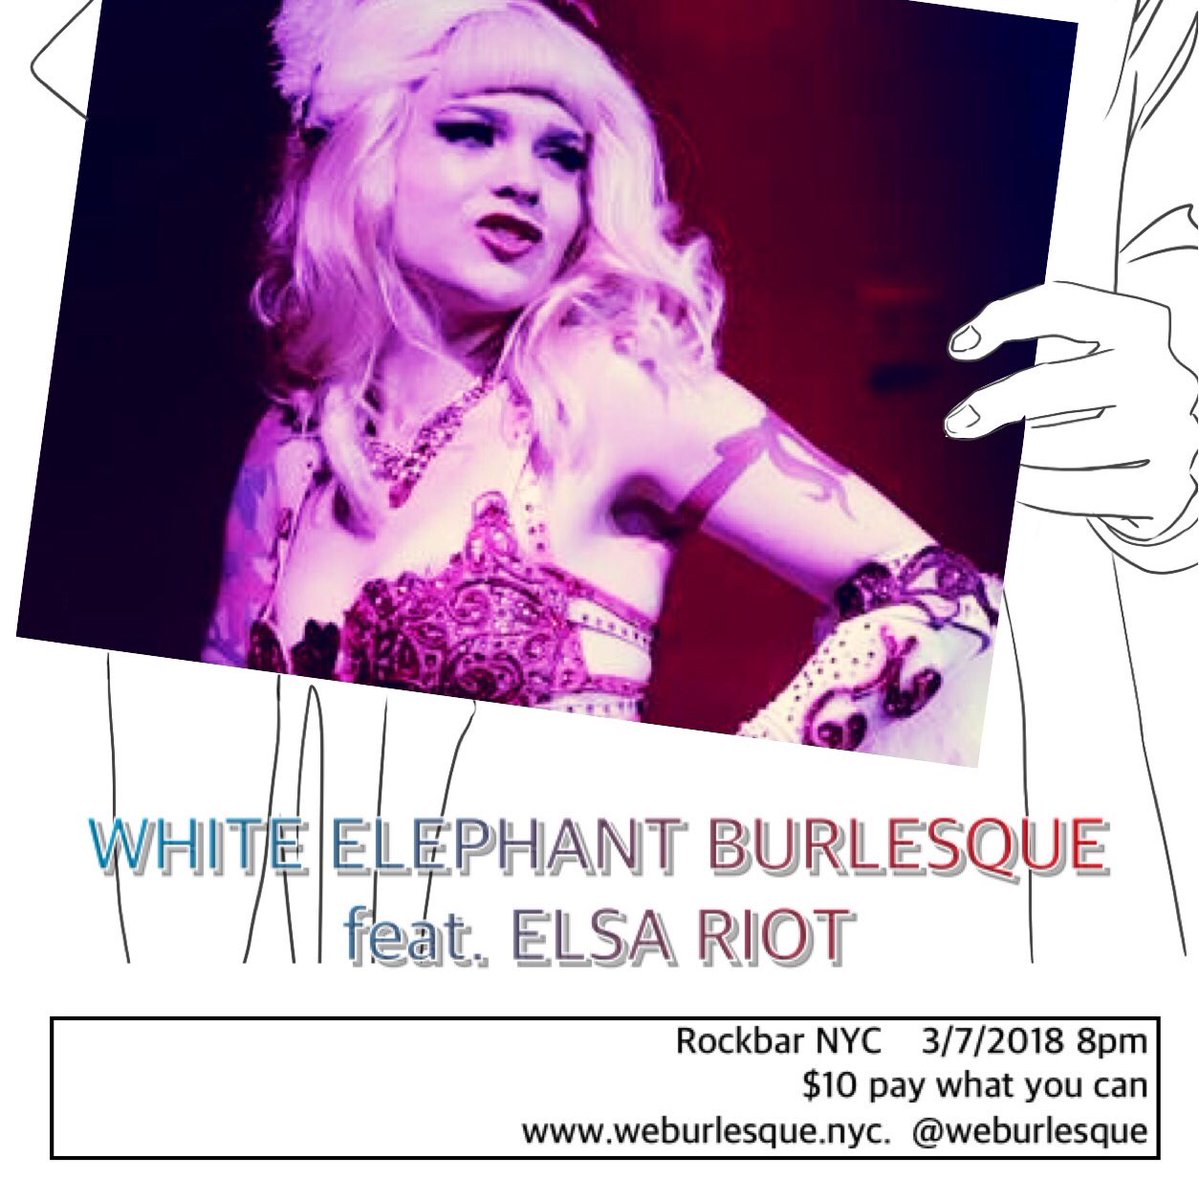 @elsa_riot of #BostonBurlesque #SmokeAndShadows joins #WhiteElephantBurlesque on March 7th @Rockbarny ... $10 pay what you can ... 8pm #burlesque #burlesqueshowgirl #neoburlesque #nycburlesque #gaynyc #nycgay